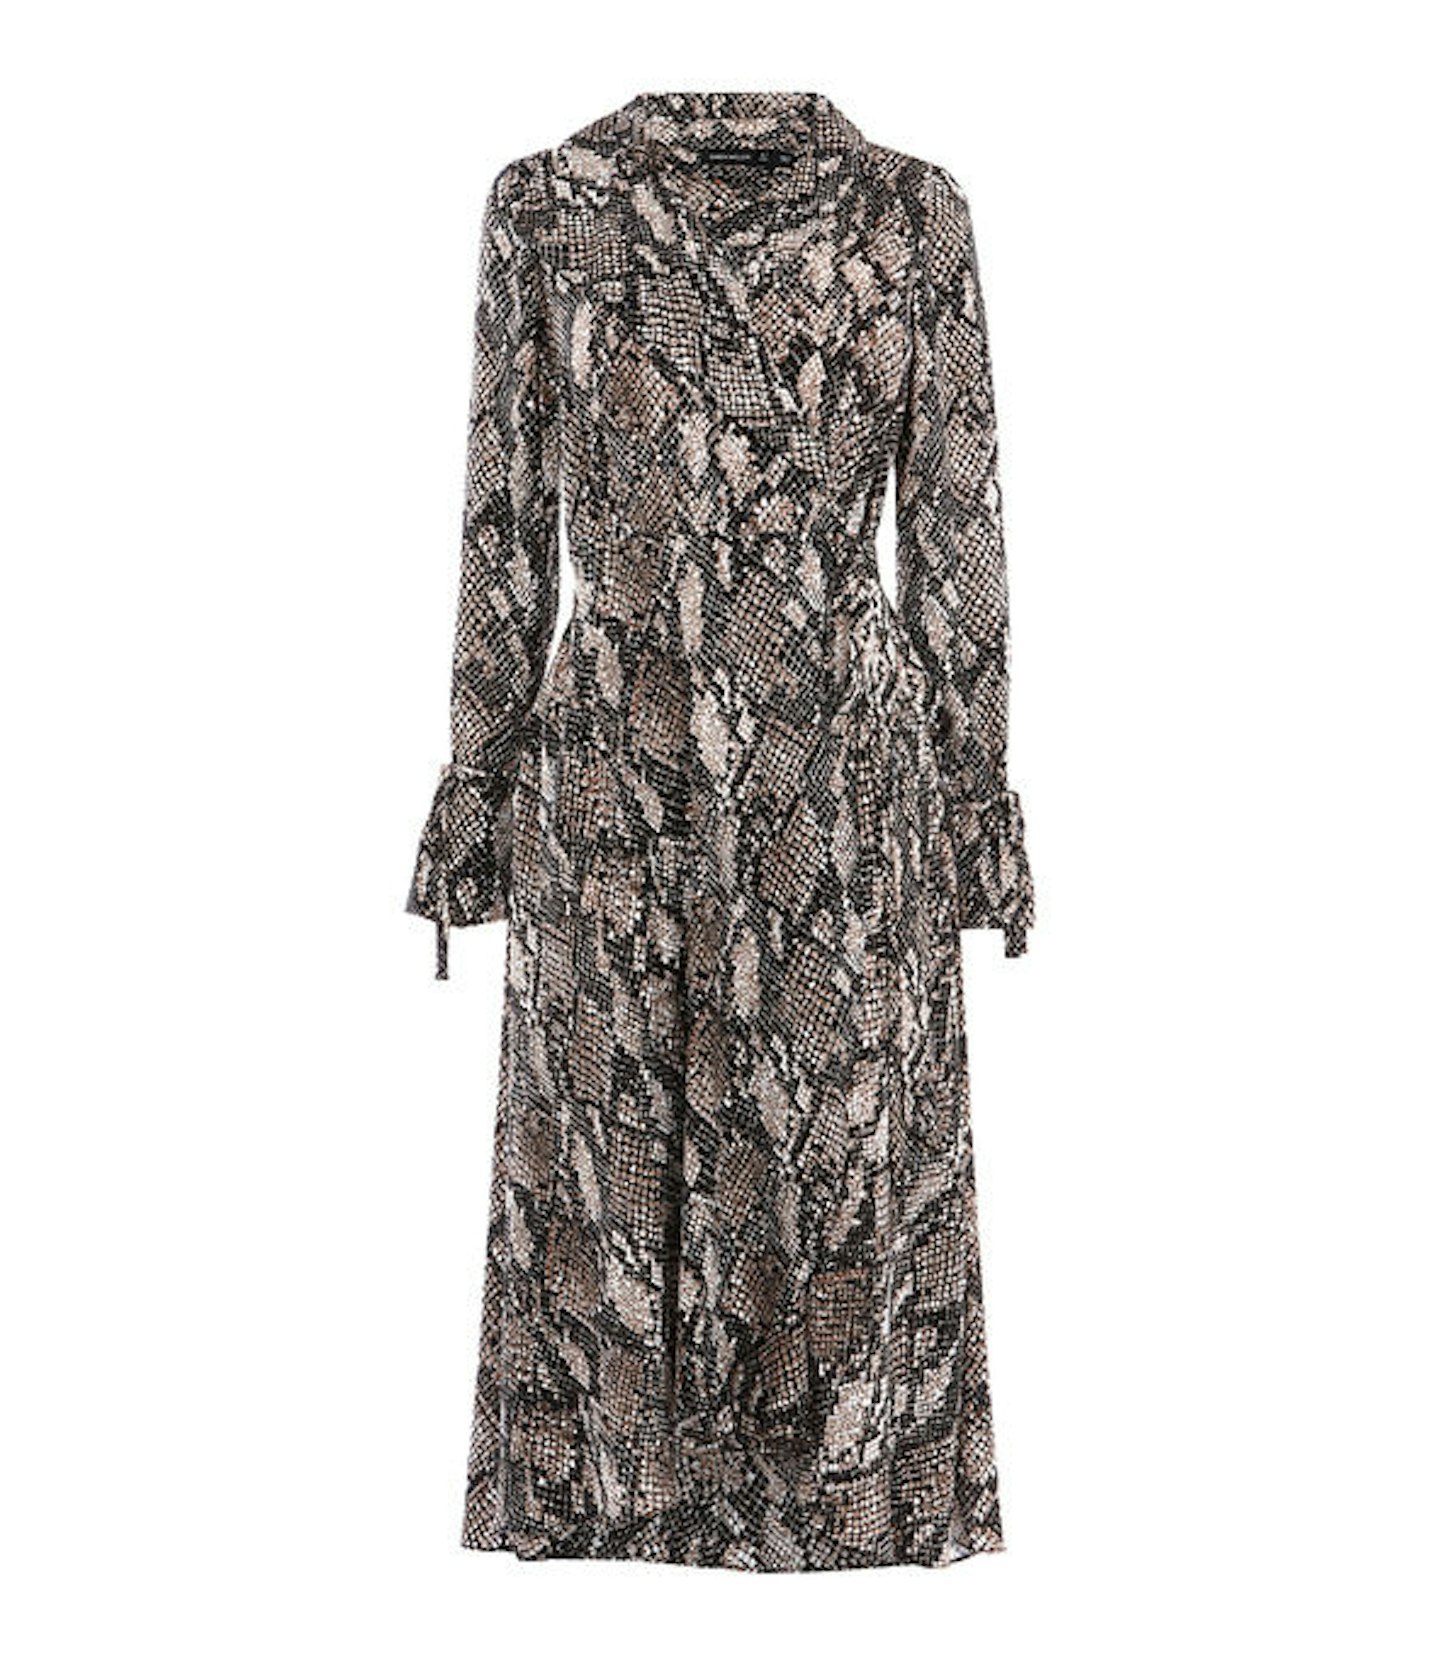 Karen Millen, Snakeskin Print Midi Dress, £199